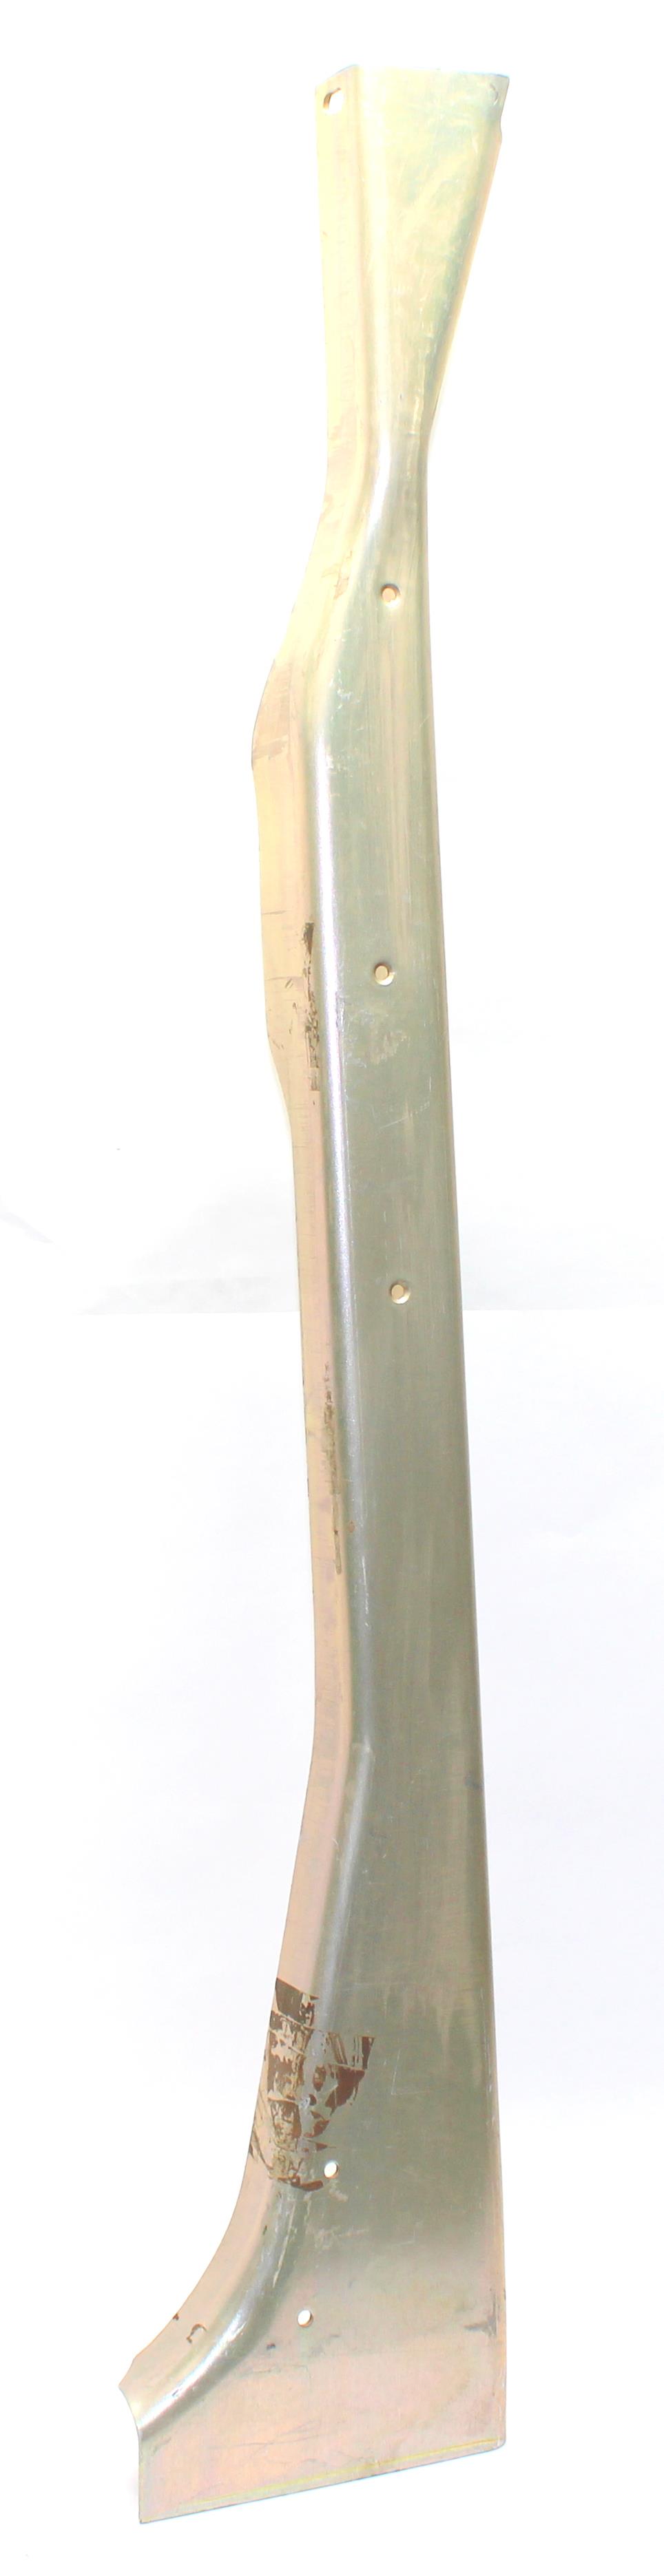 HM-3661 | HM-3661 Vertical A Pillar Right Front HMMWV  (17).JPG